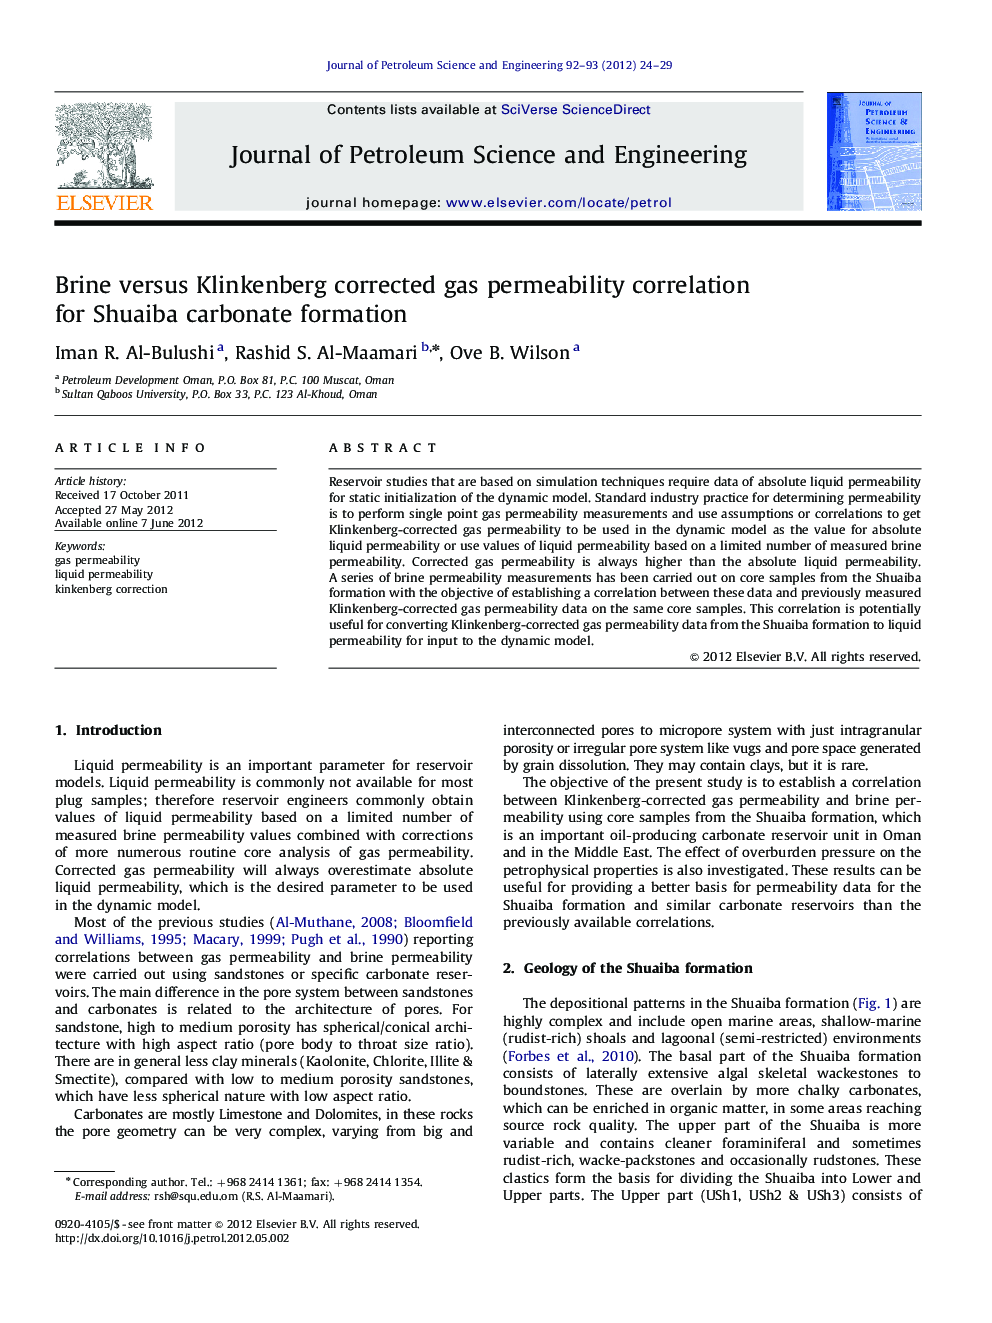 Brine versus Klinkenberg corrected gas permeability correlation for Shuaiba carbonate formation